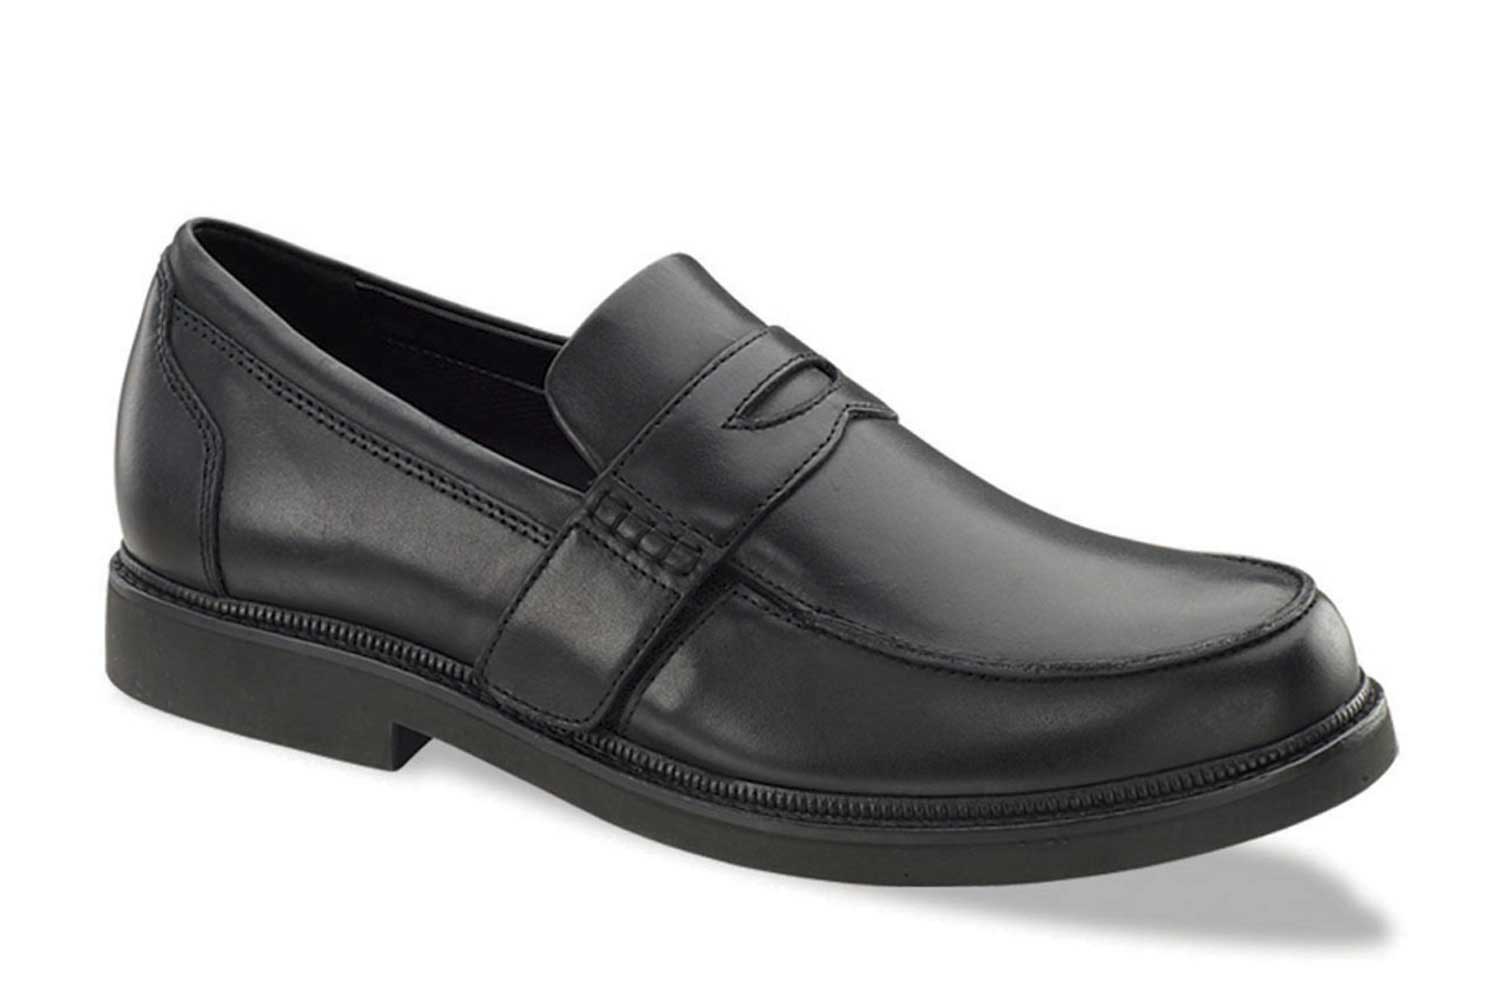 Apex Shoes LT200M Lexington Classic Oxford Dress Shoe - Men's Comfort Therapeutic Diabetic Shoe - Medium - Extra Wide - Extra Depth For Orthotics